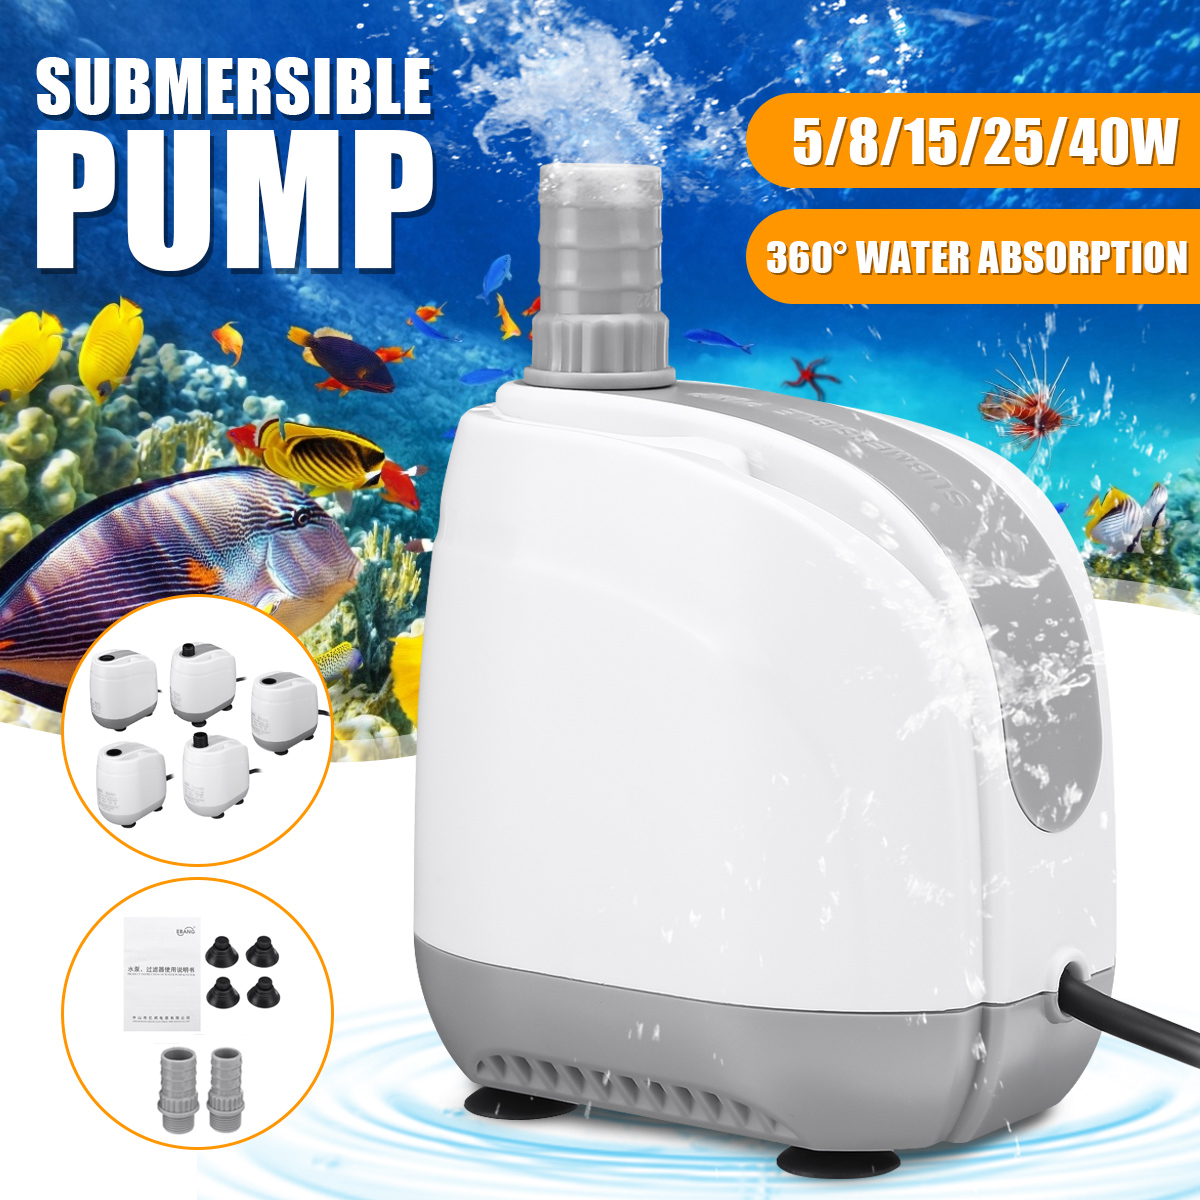 58152540W-Aquarium-Water-Pump-Submersible-Fish-Pond-Tank-Waterfall-Sump-1783989-2